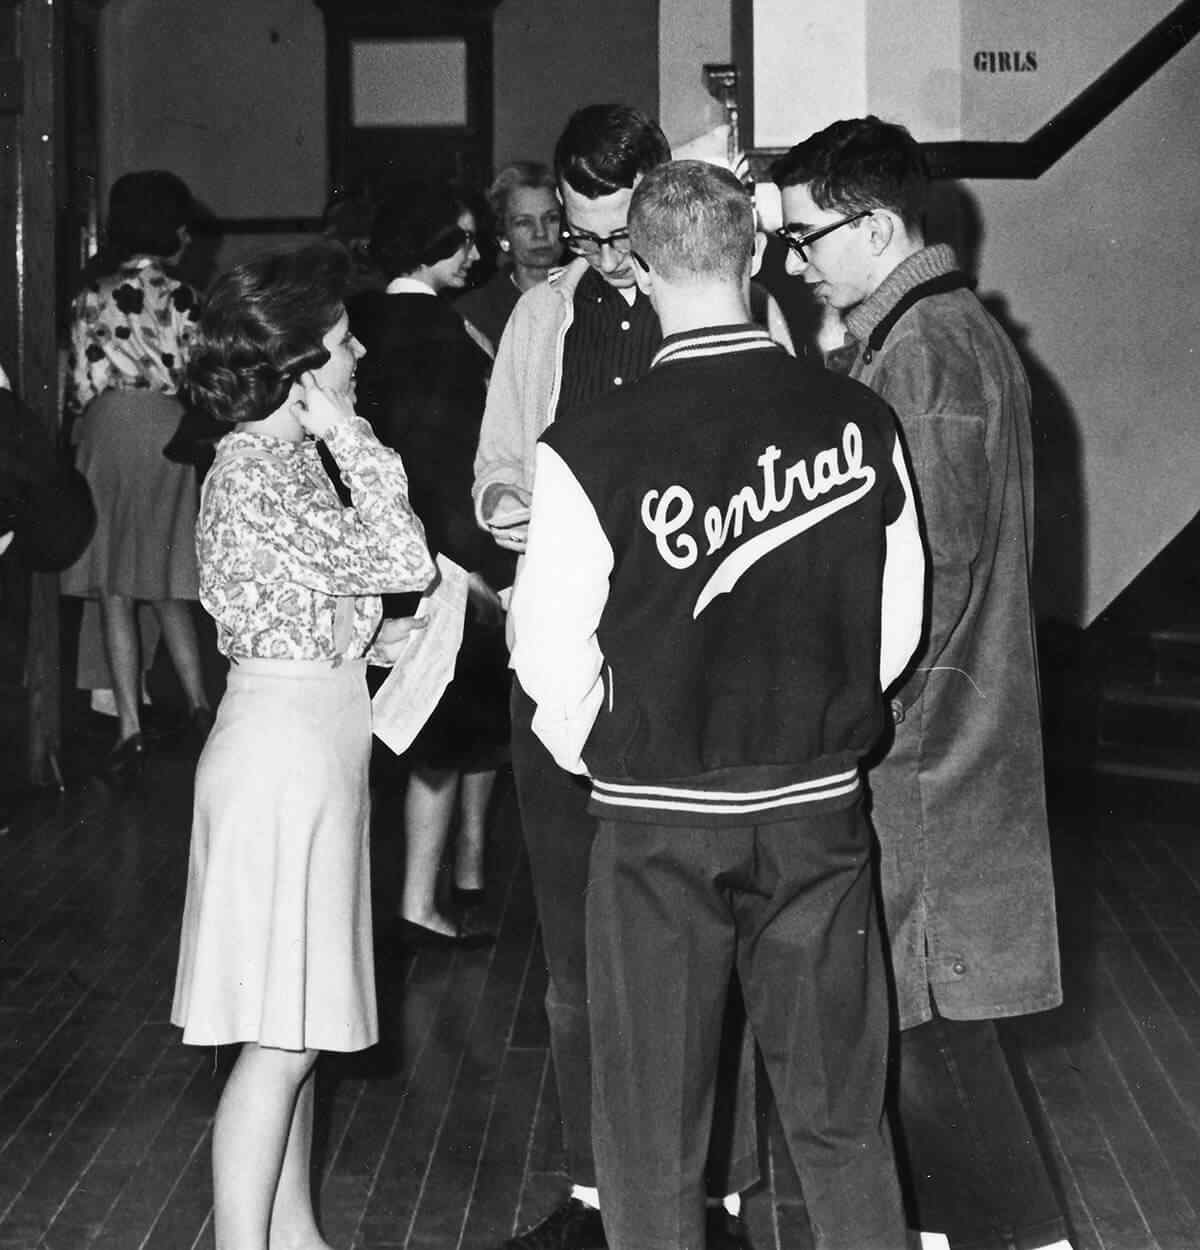 Vintage students in hallway photo